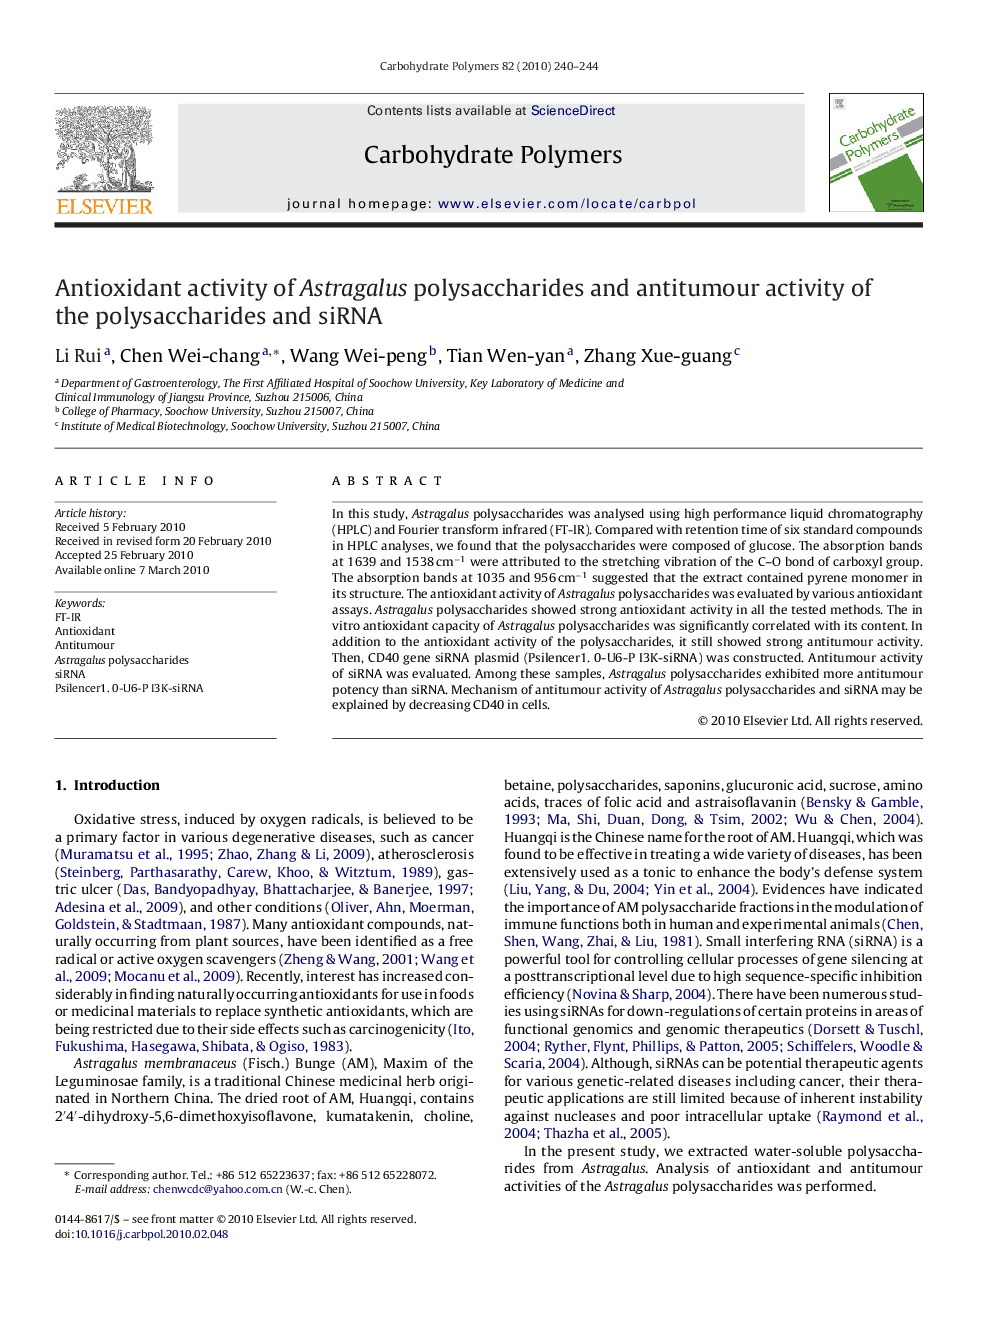 Antioxidant activity of Astragalus polysaccharides and antitumour activity of the polysaccharides and siRNA